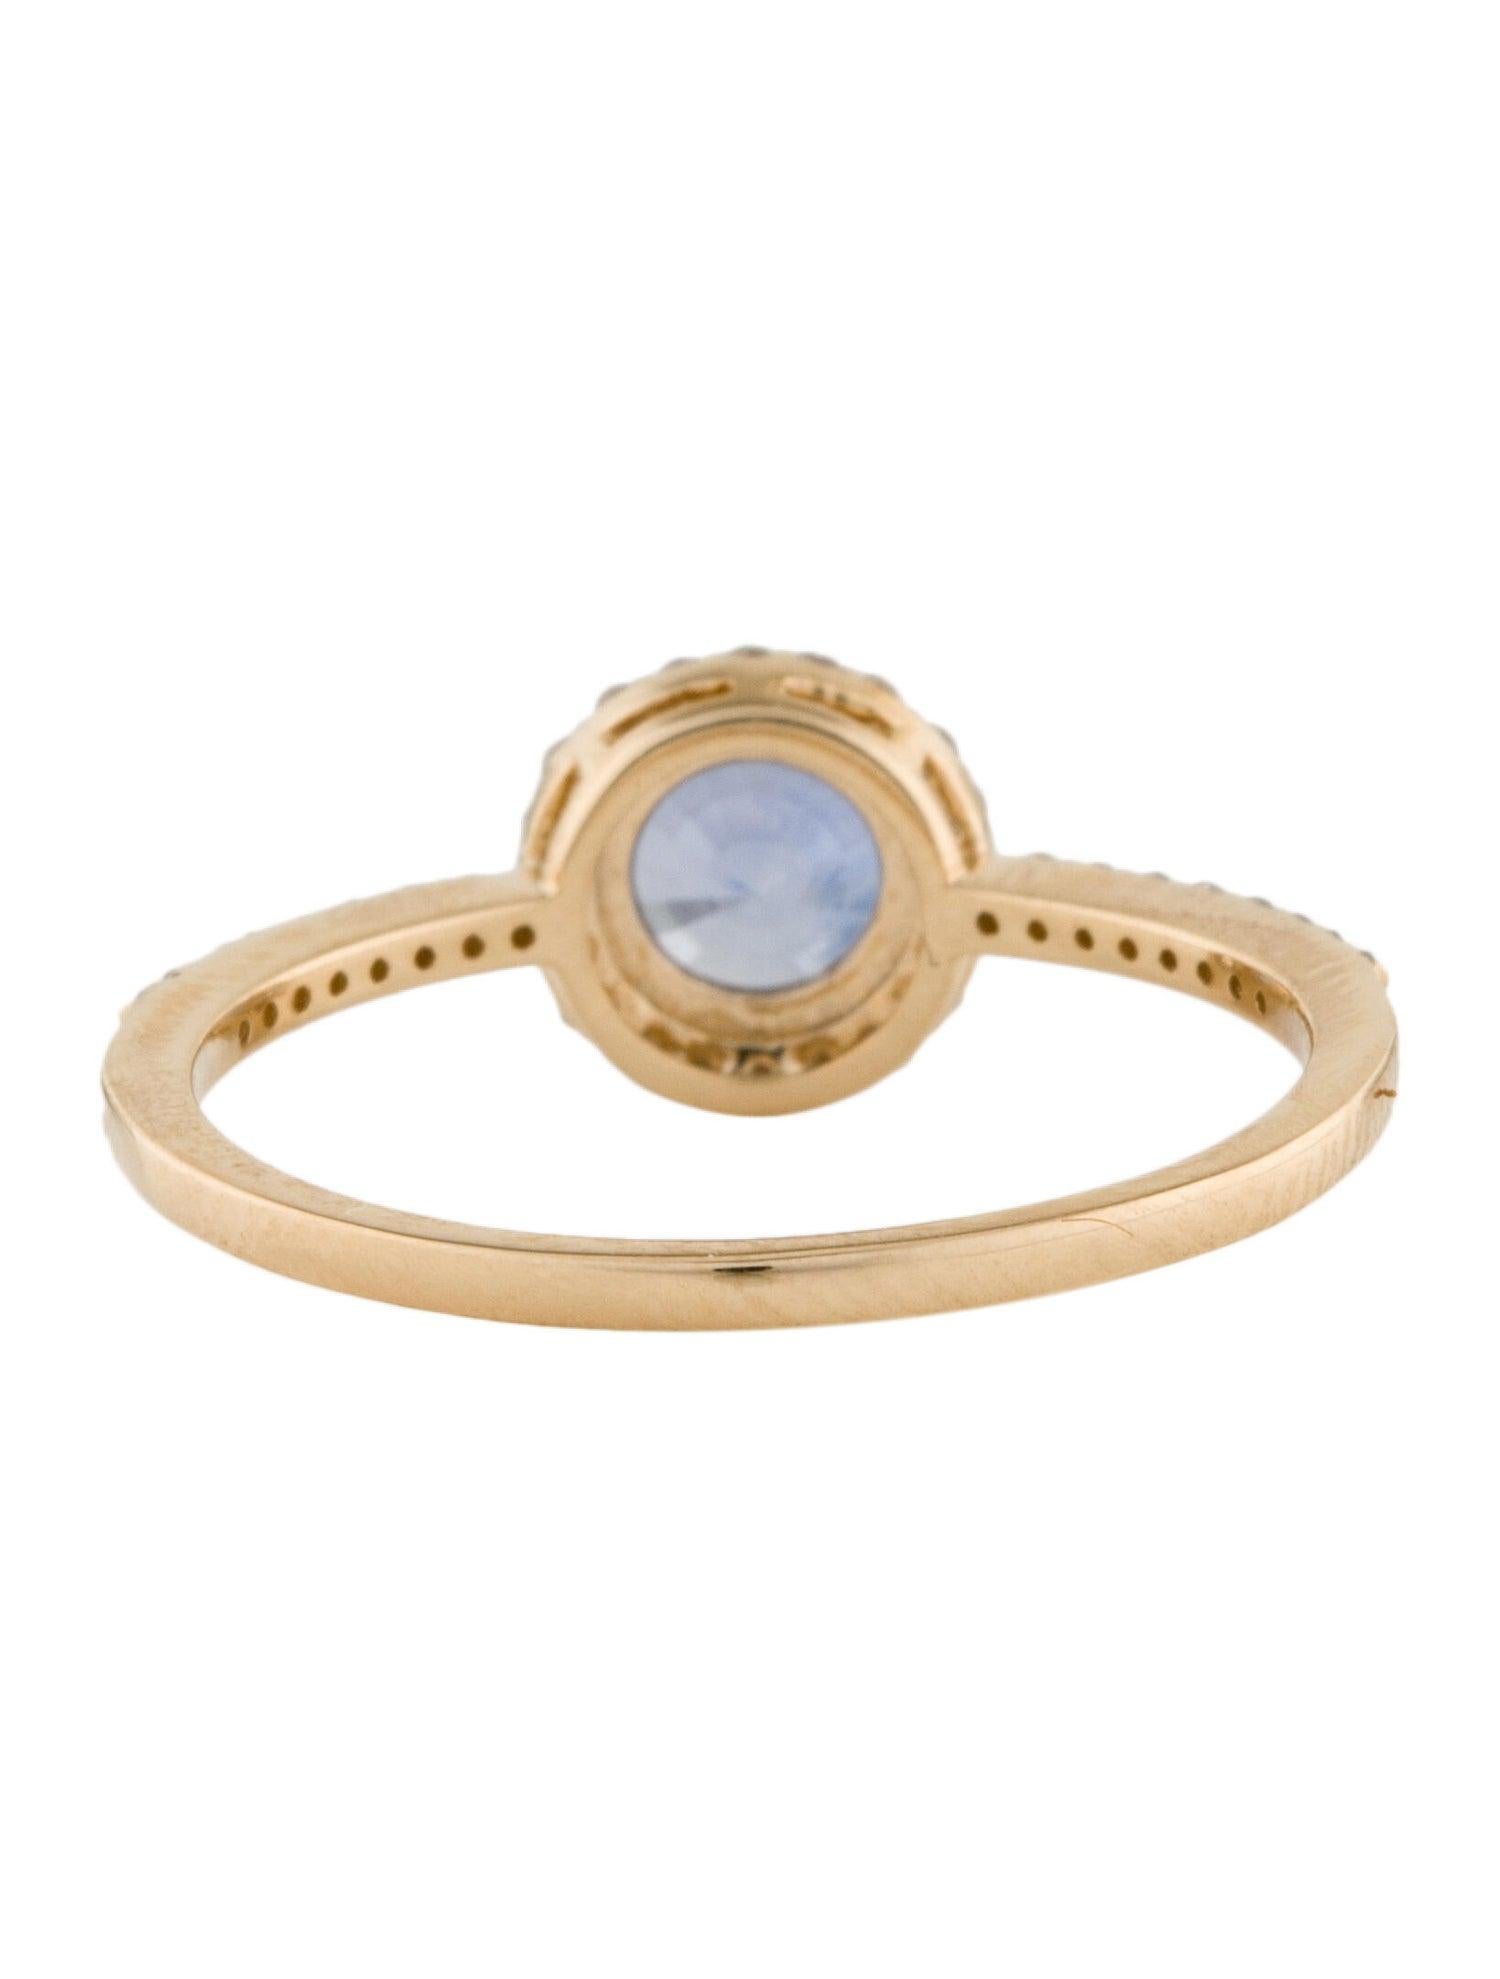 Brilliant Cut 14K Sapphire & Diamond Cocktail Ring - Size 6.75 - Elegant Statement Jewelry